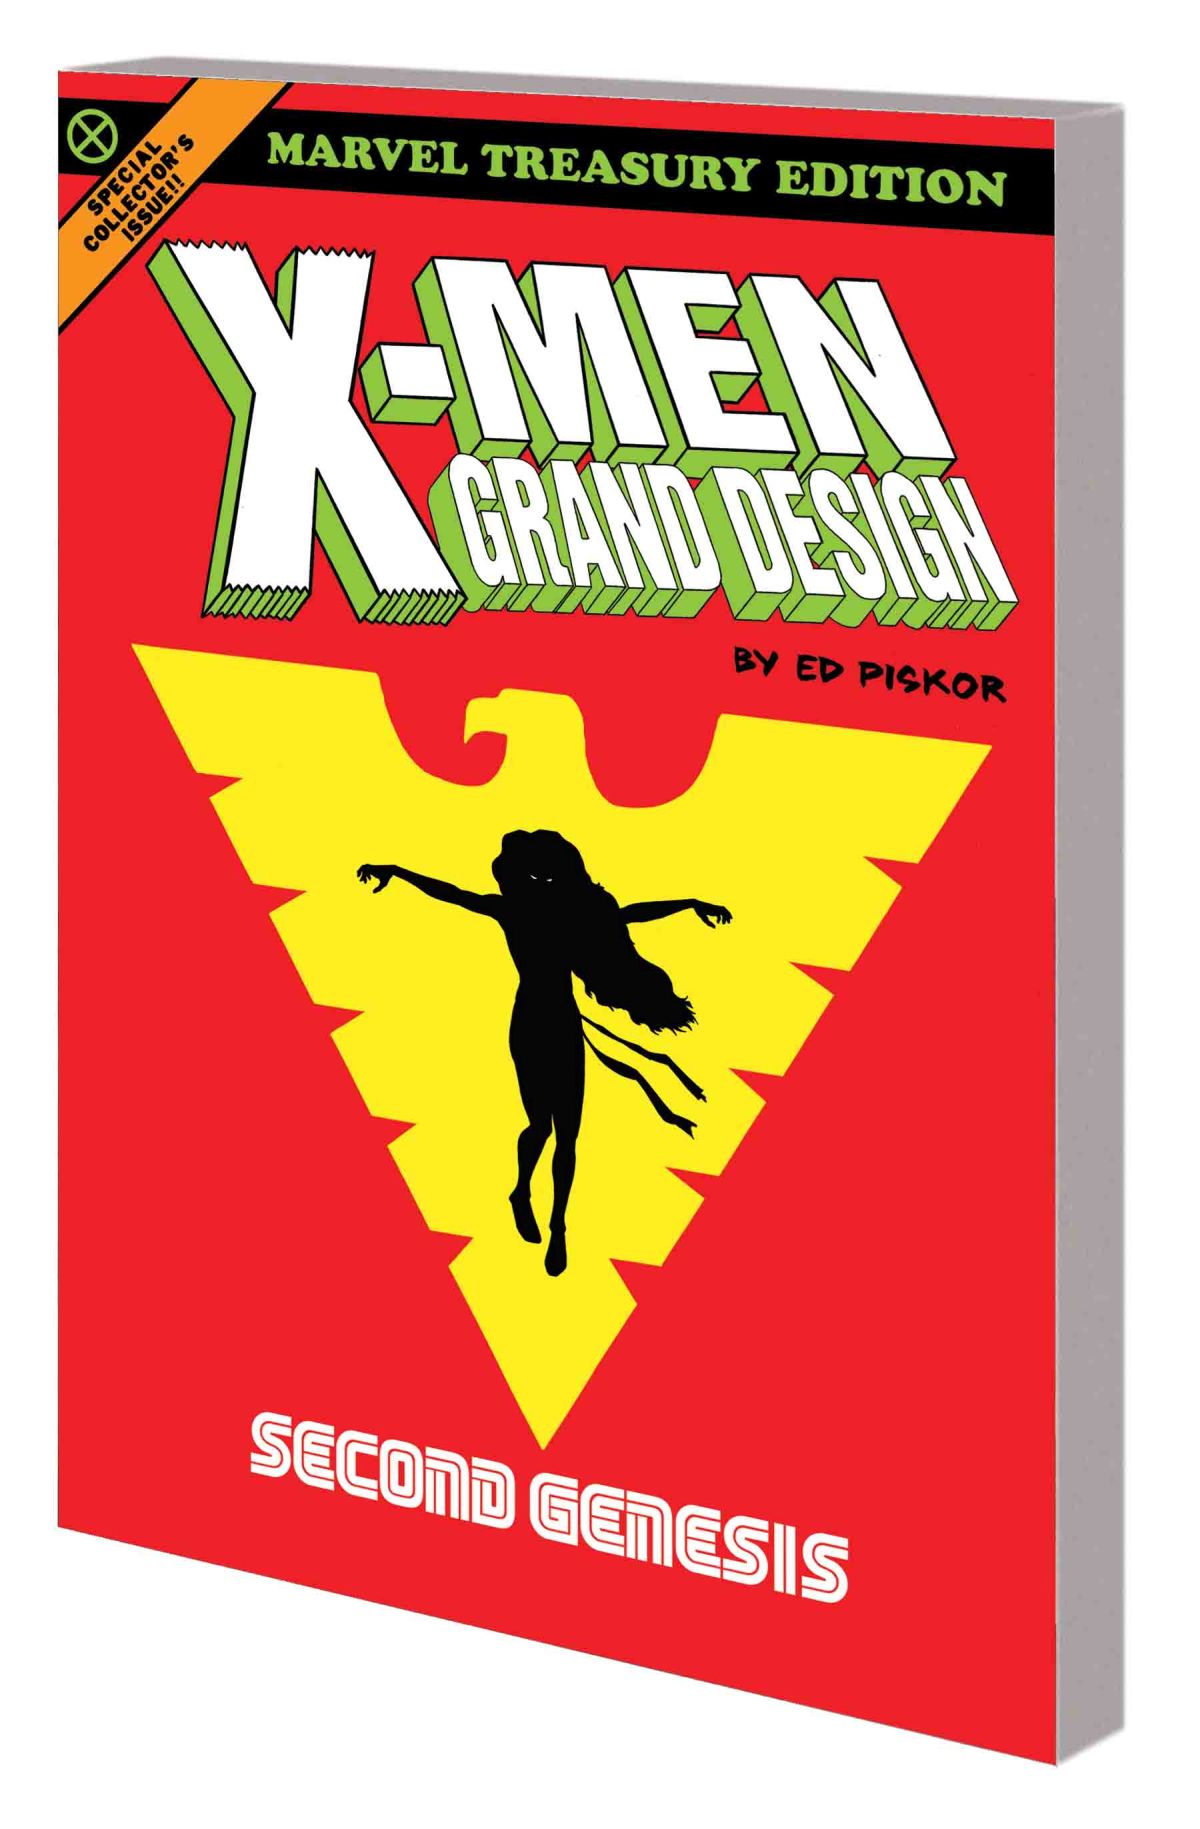 X-MEN: GRAND DESIGN — SECOND GENESIS